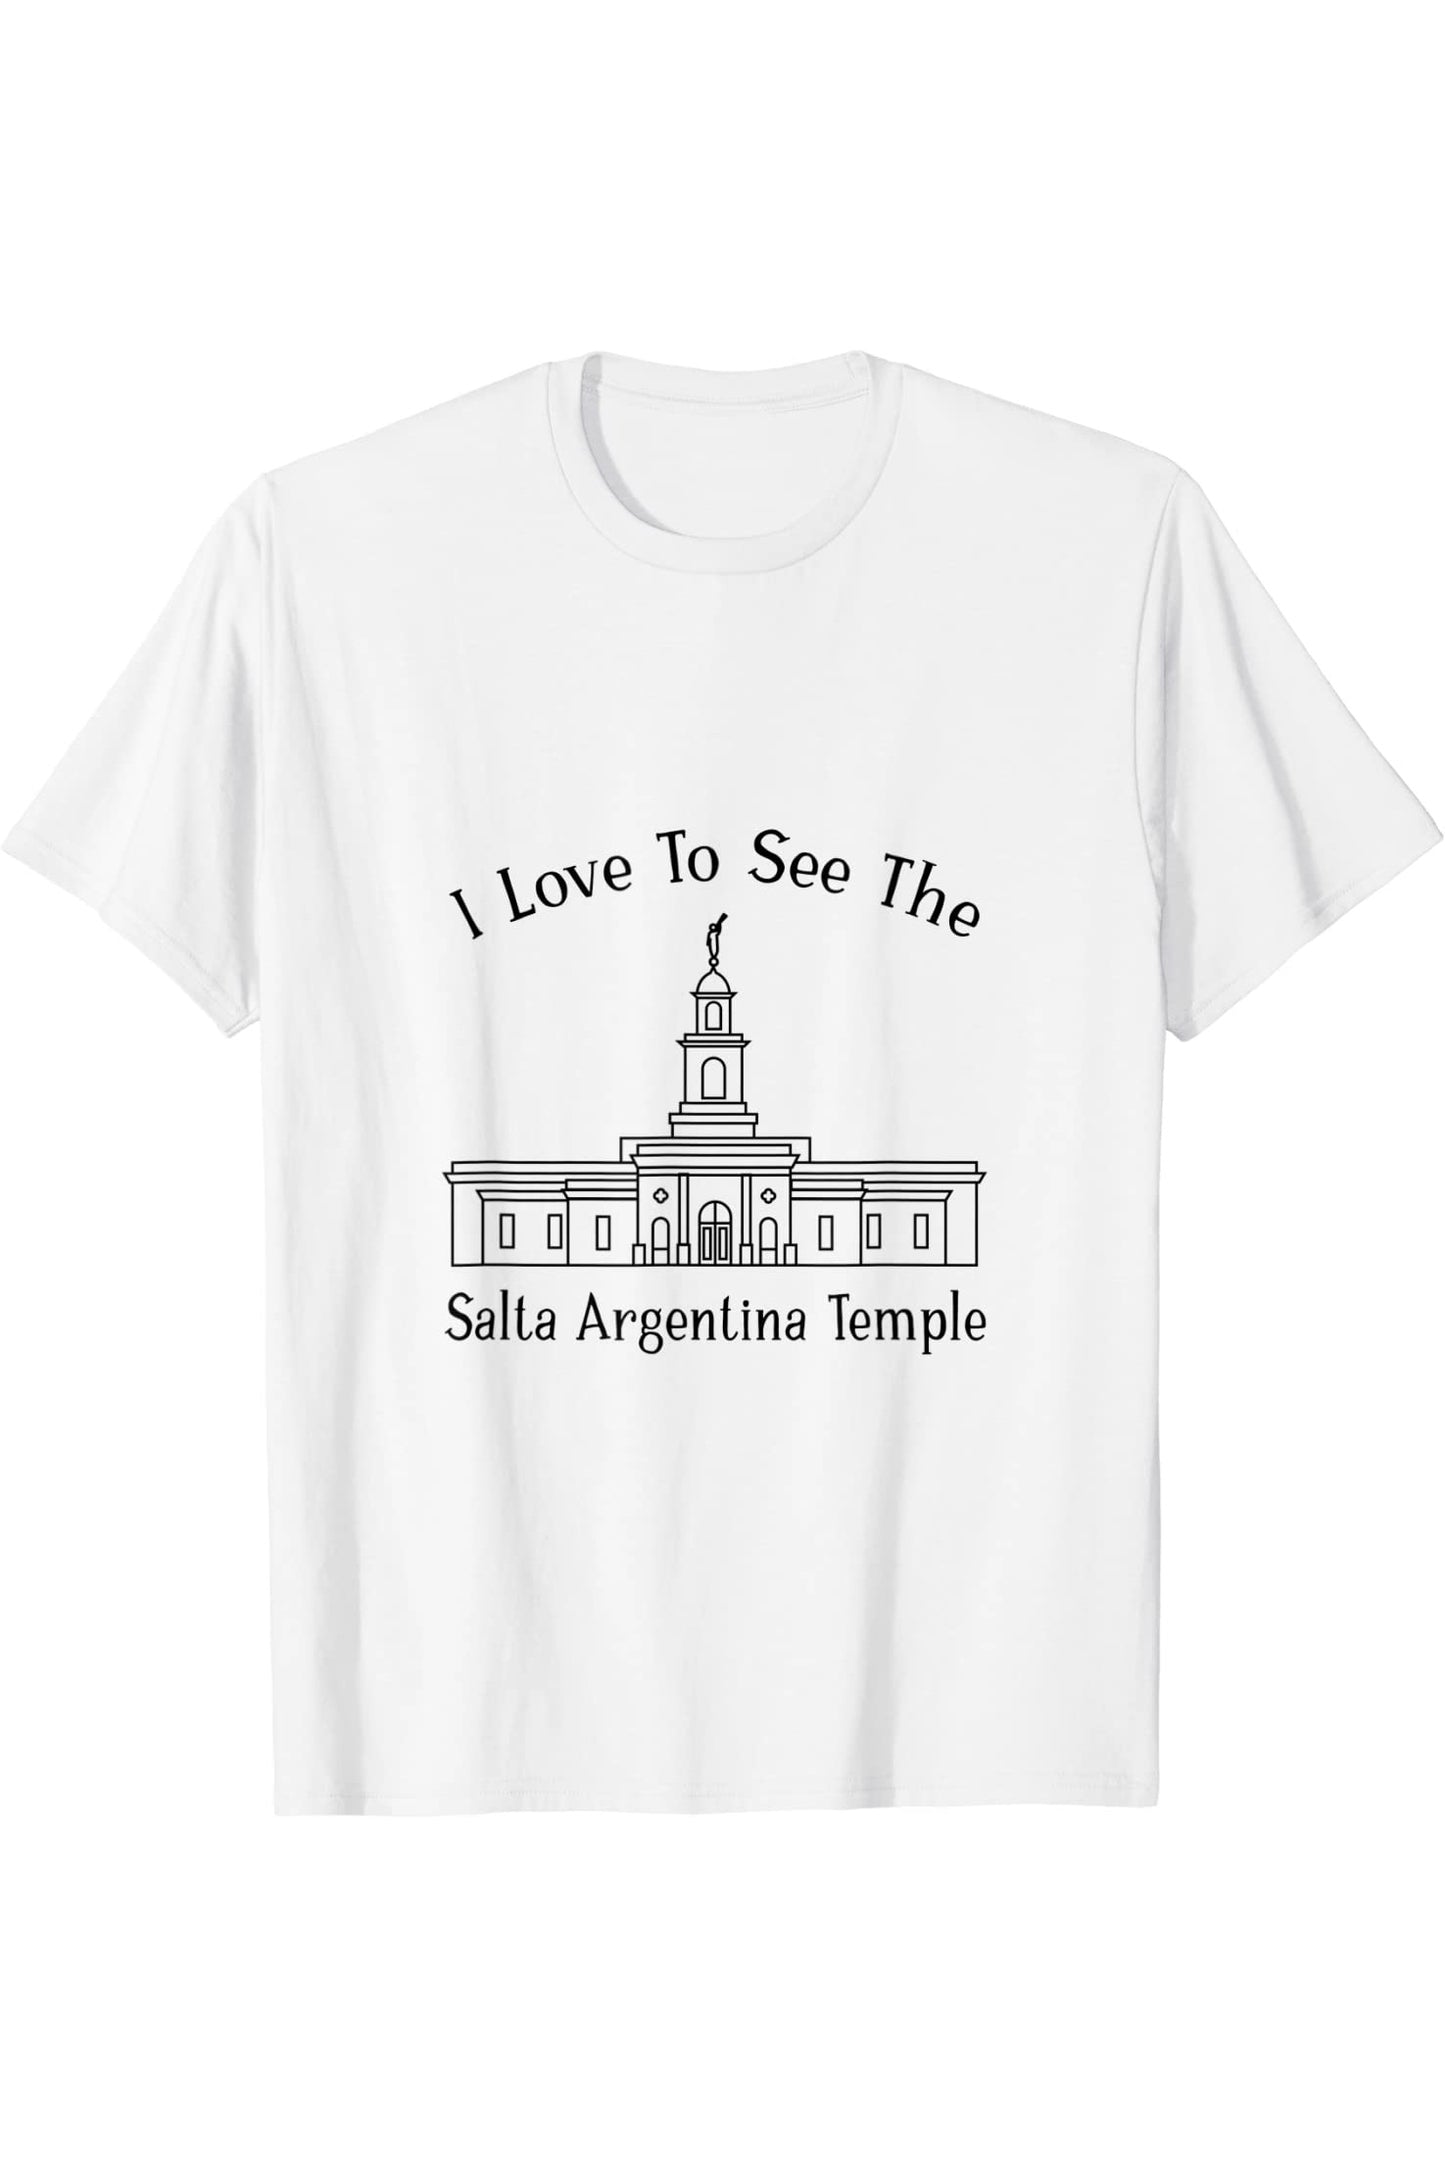 Salta Argentina Temple T-Shirt - Happy Style (English) US